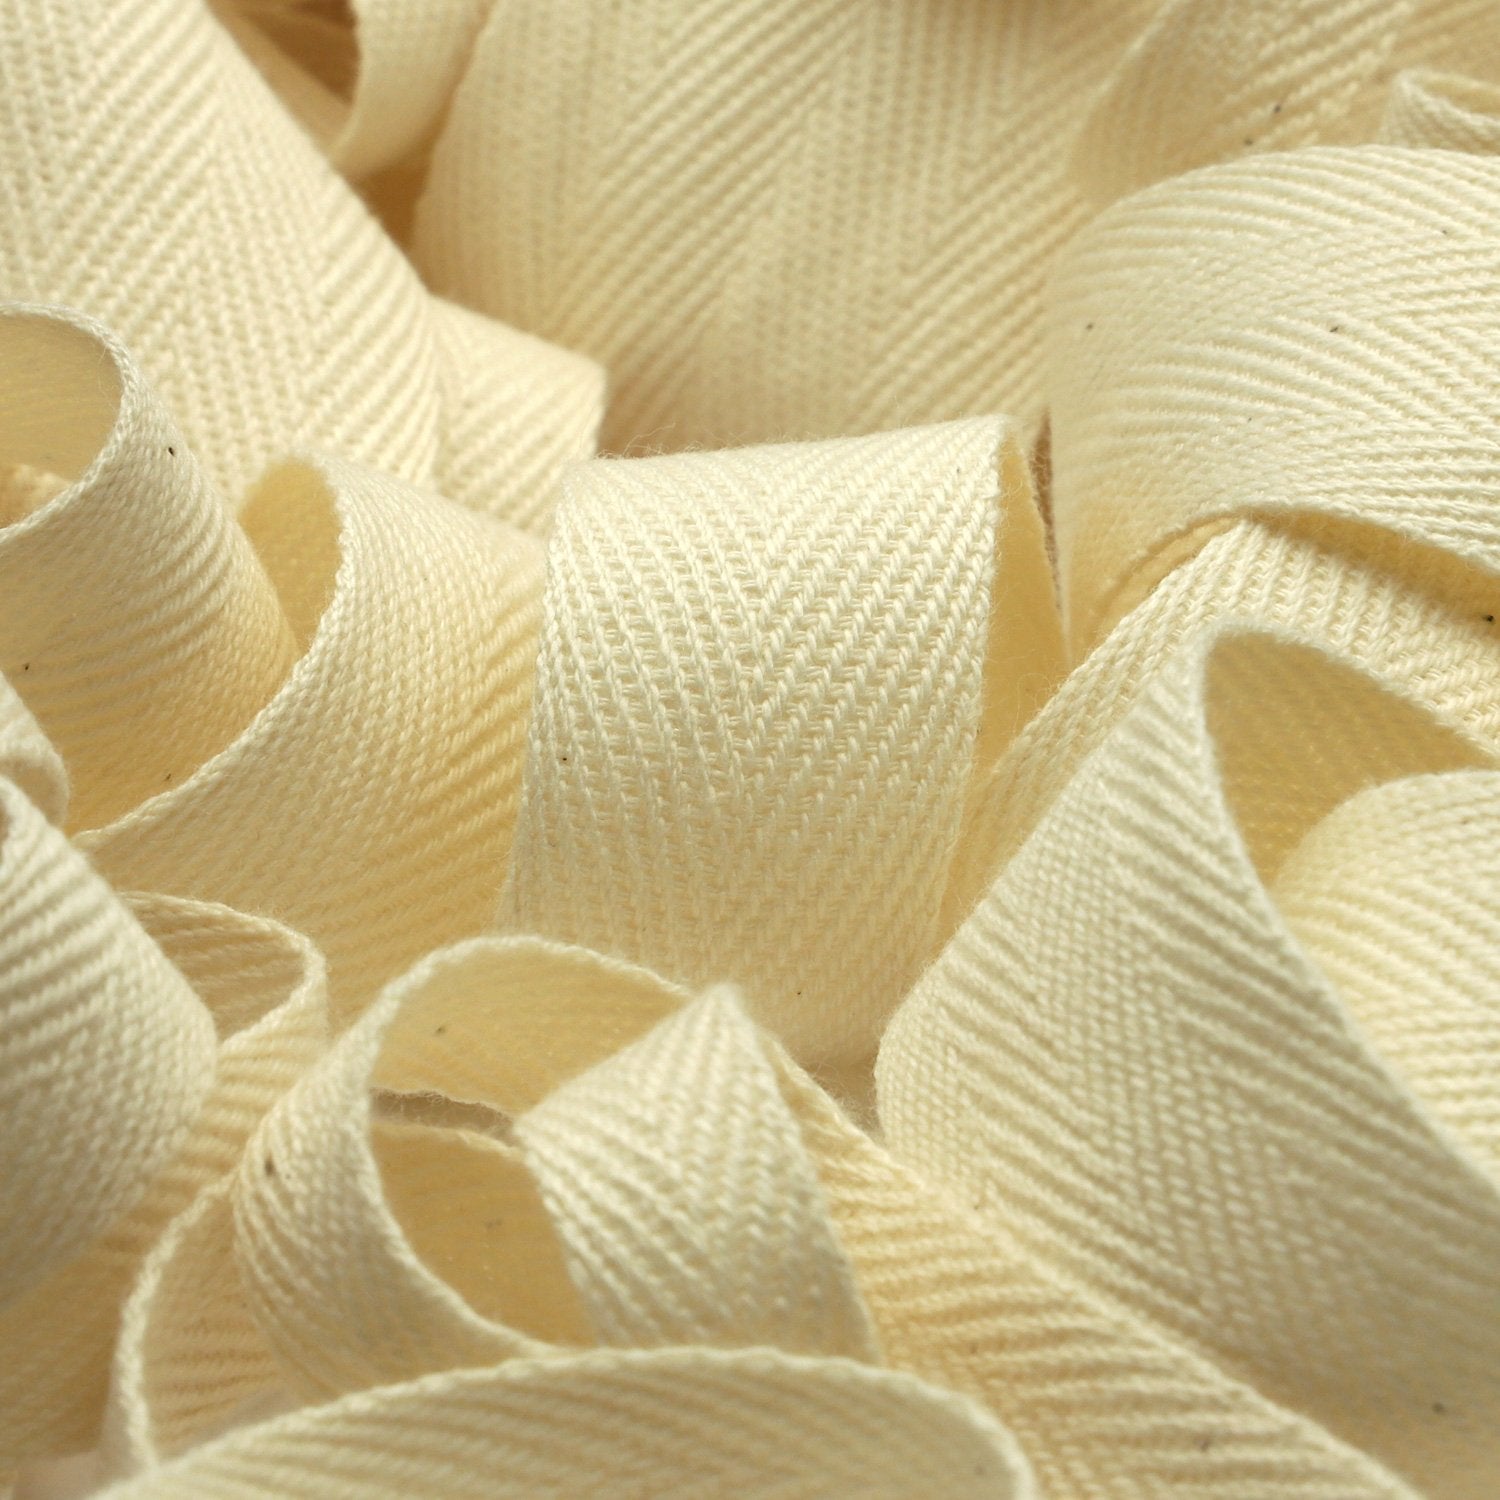 FUJIYAMA RIBBON [Wholesale] Organic Cotton Herringbone Ribbon 50mm Ecru 30 Meters Roll